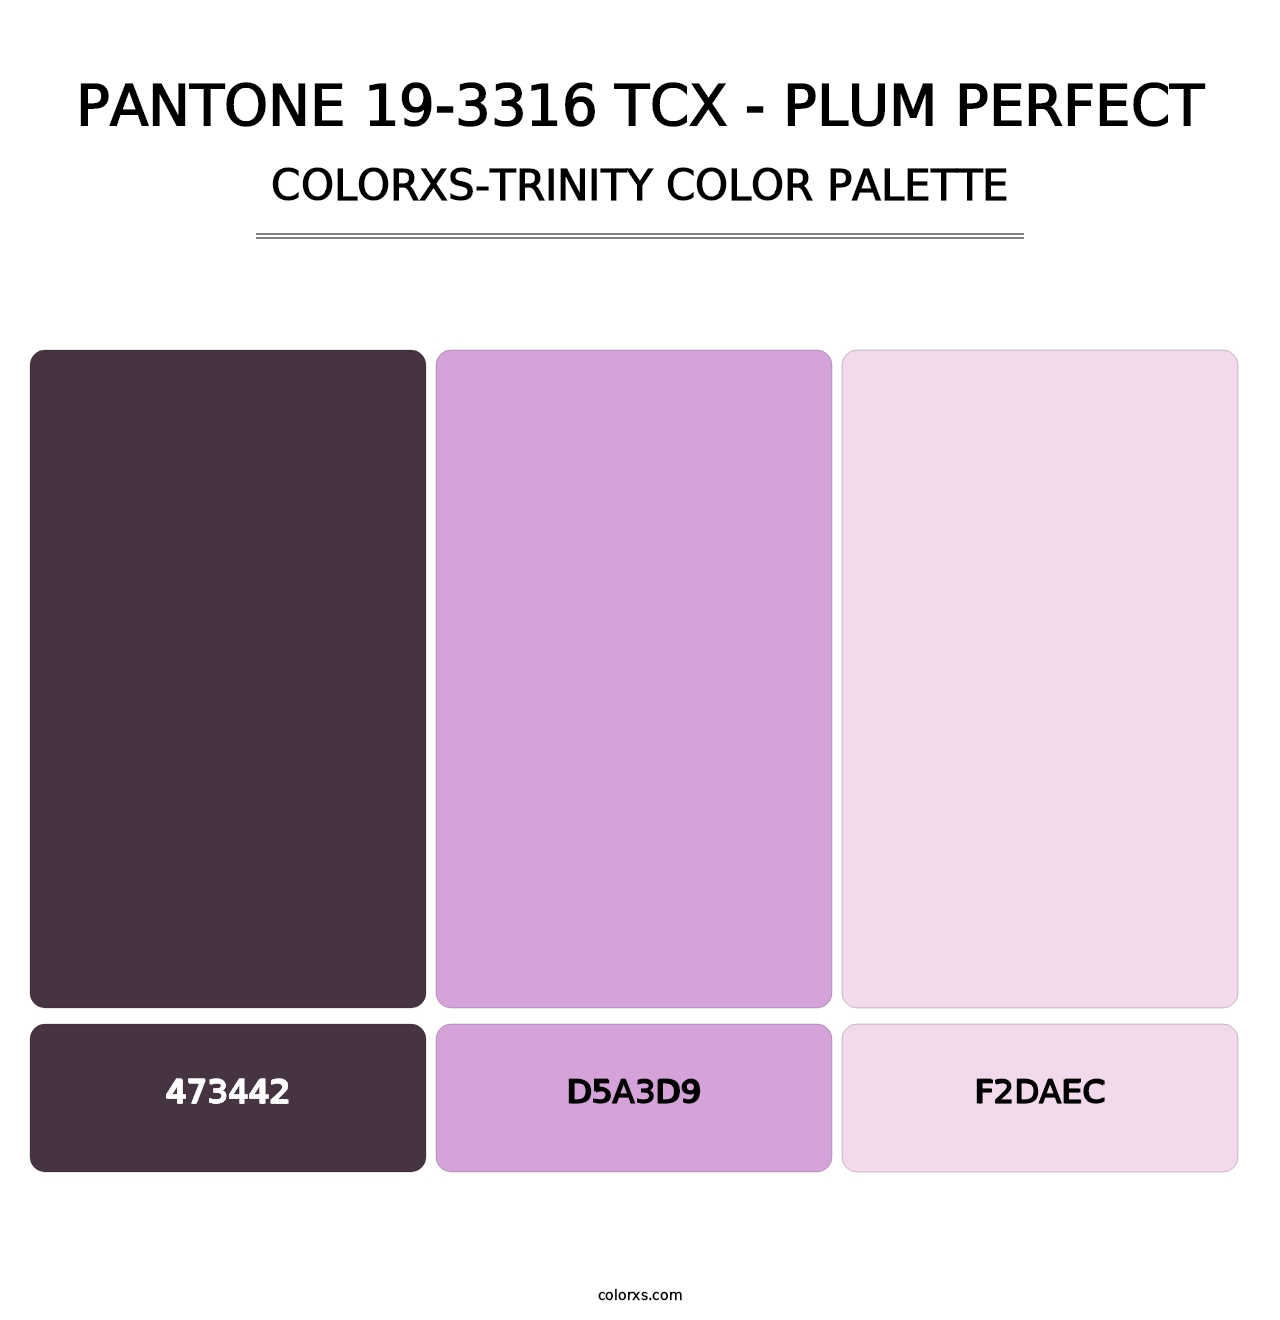 PANTONE 19-3316 TCX - Plum Perfect - Colorxs Trinity Palette